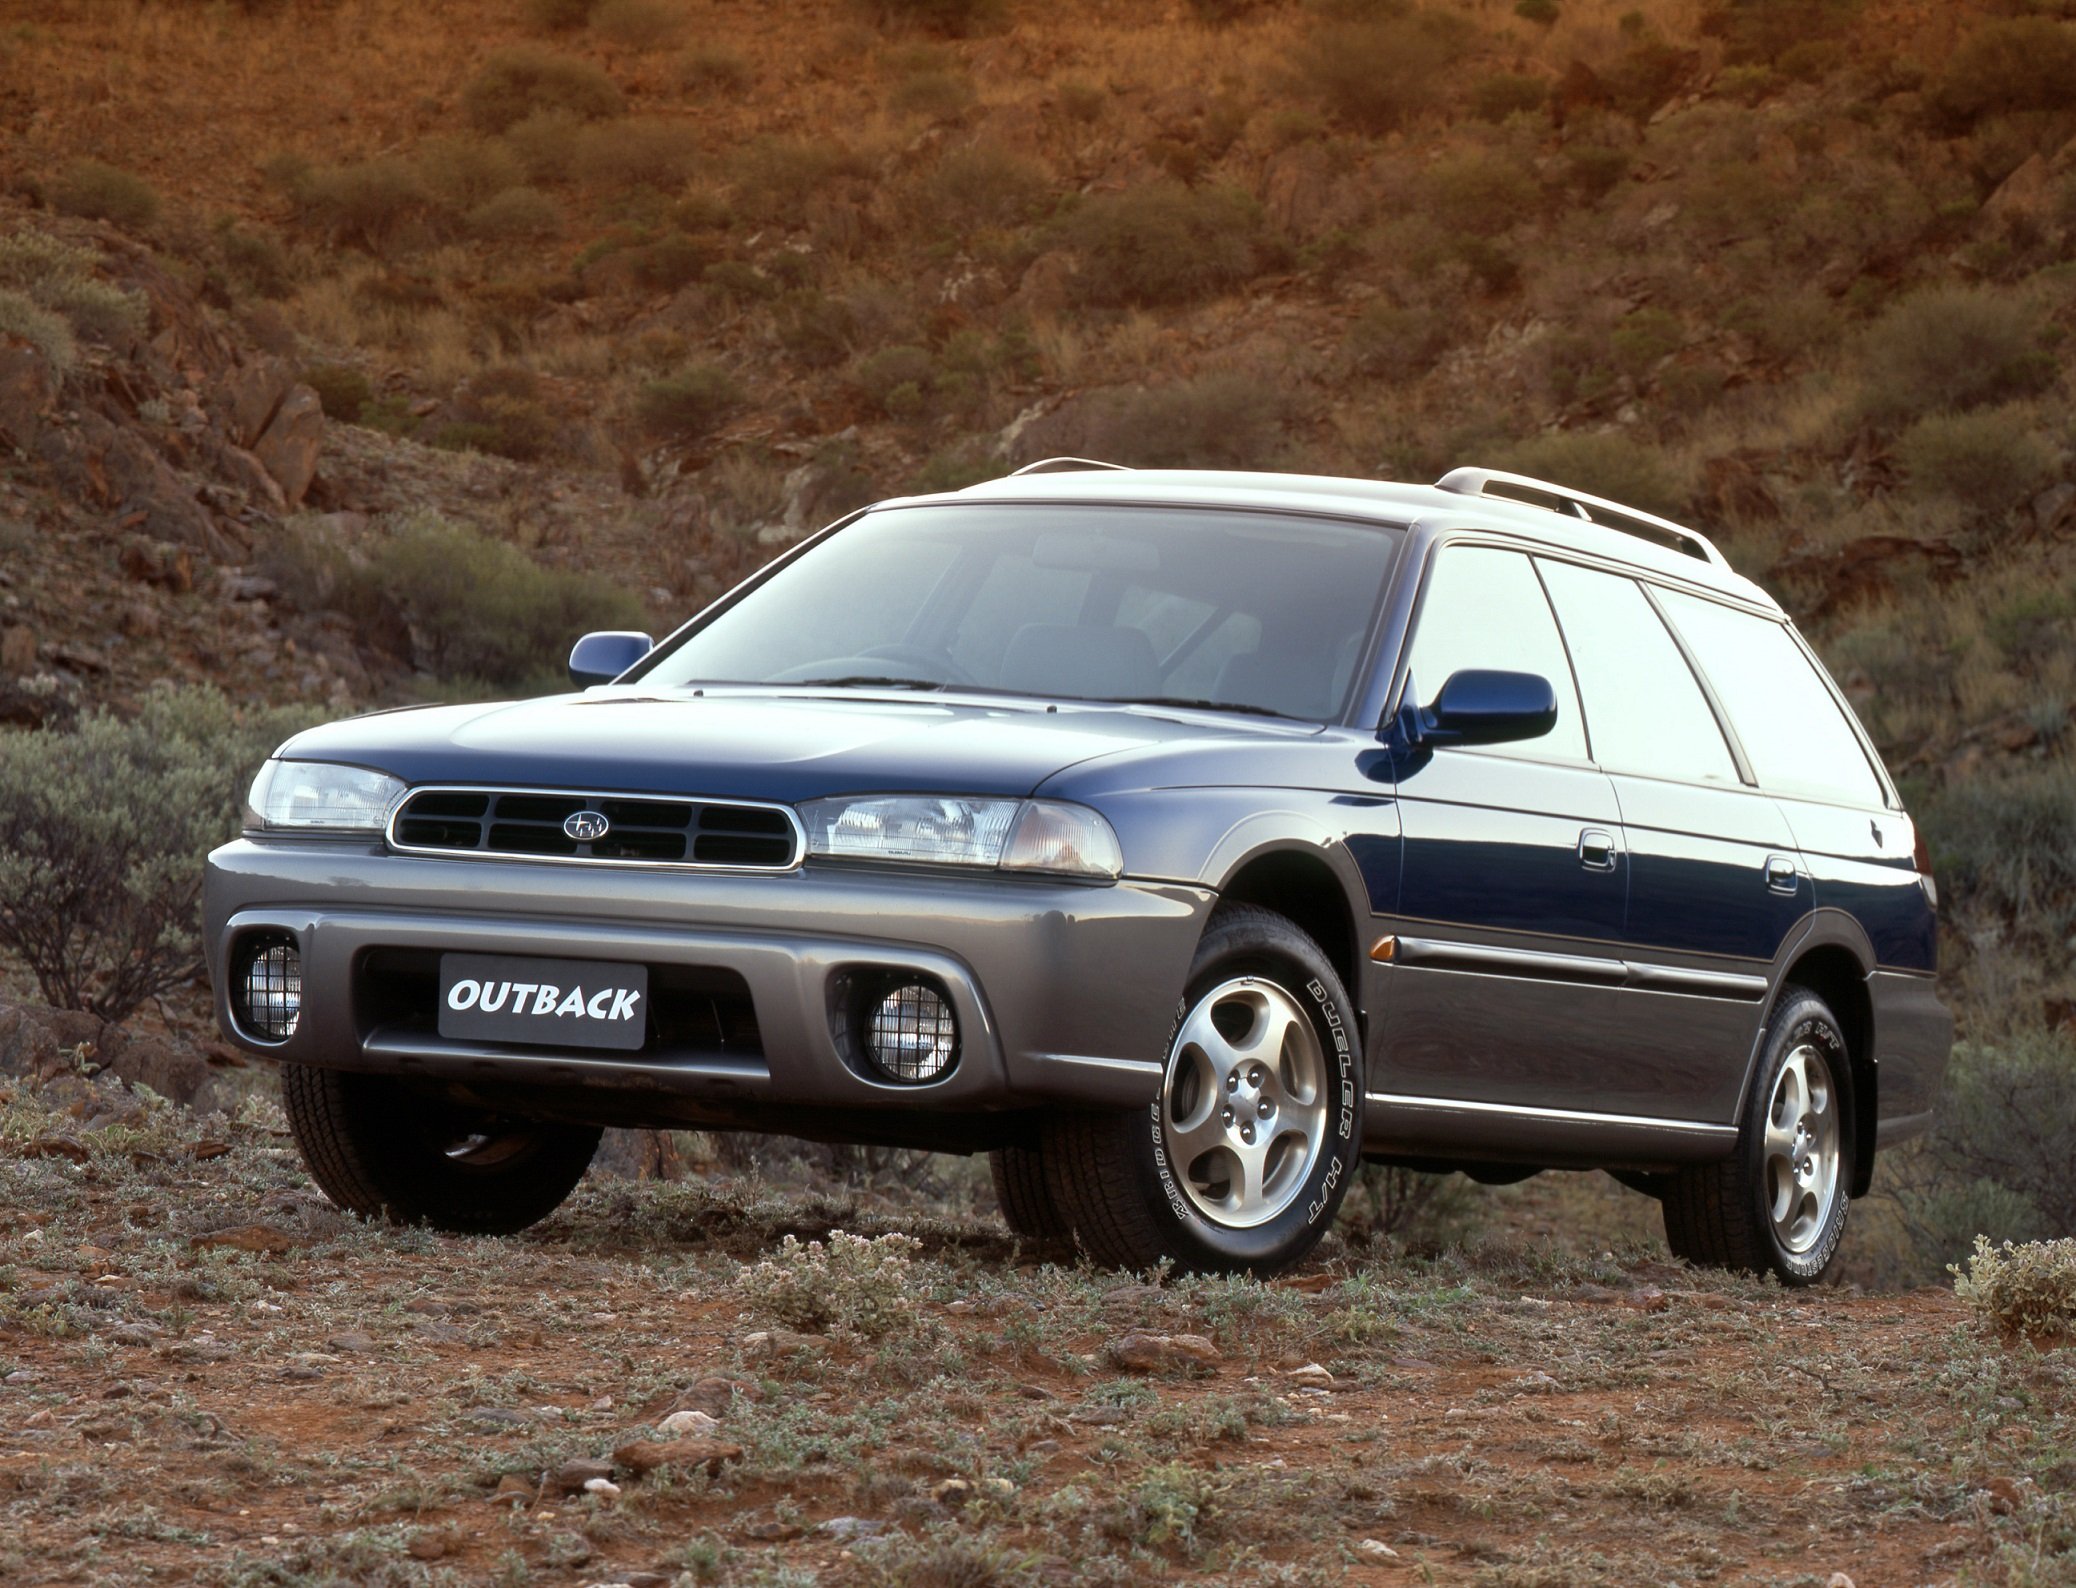 Outback was the original SUV.